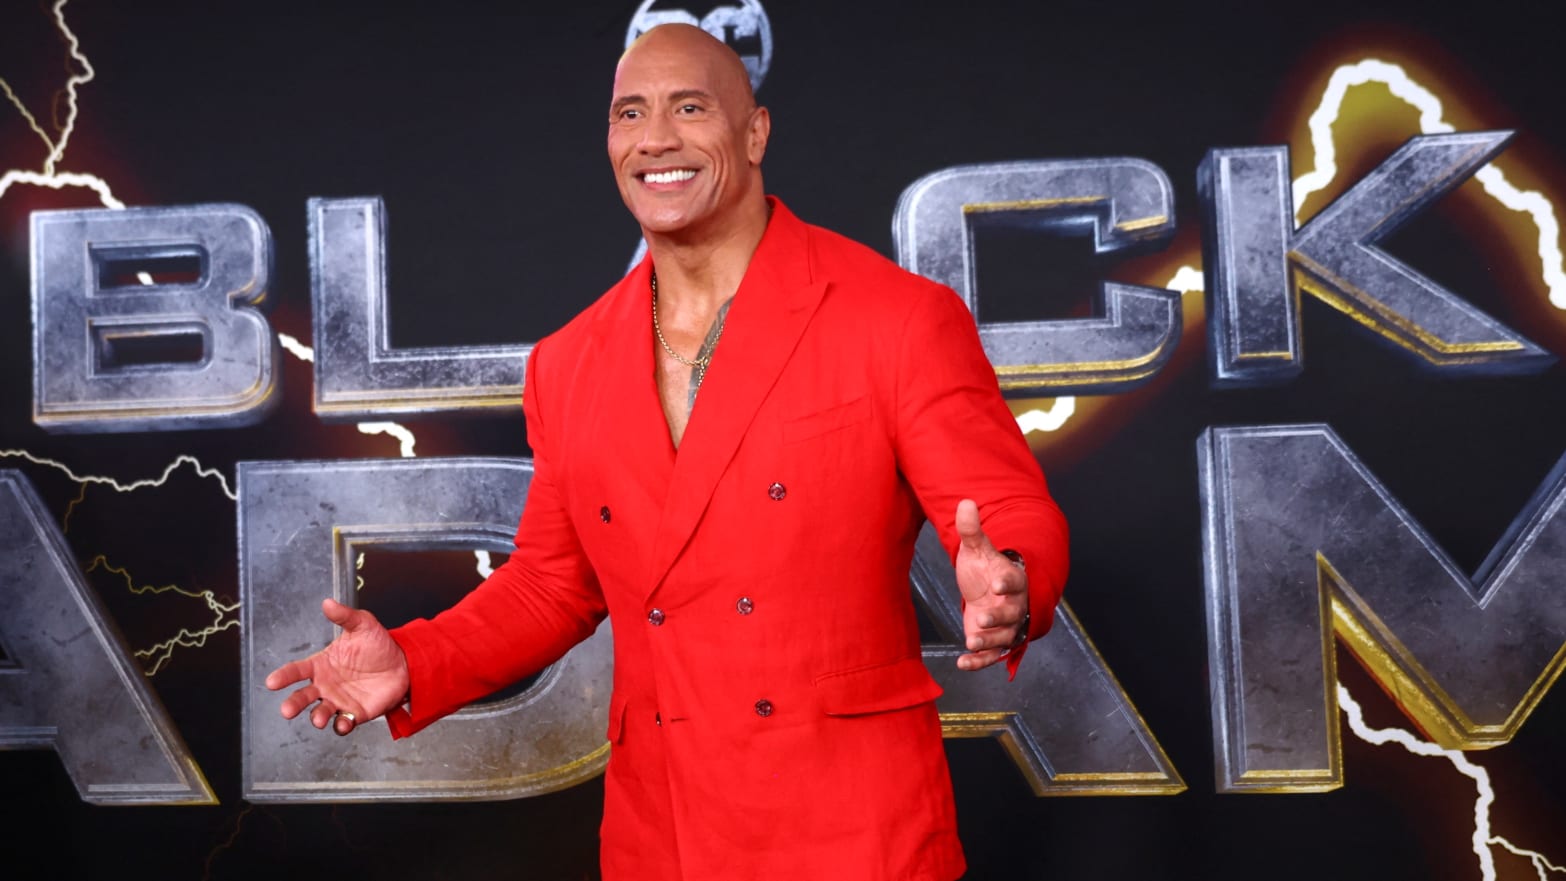 Dwayne 'The Rock' Johnson teases Black Adam vs Superman clash